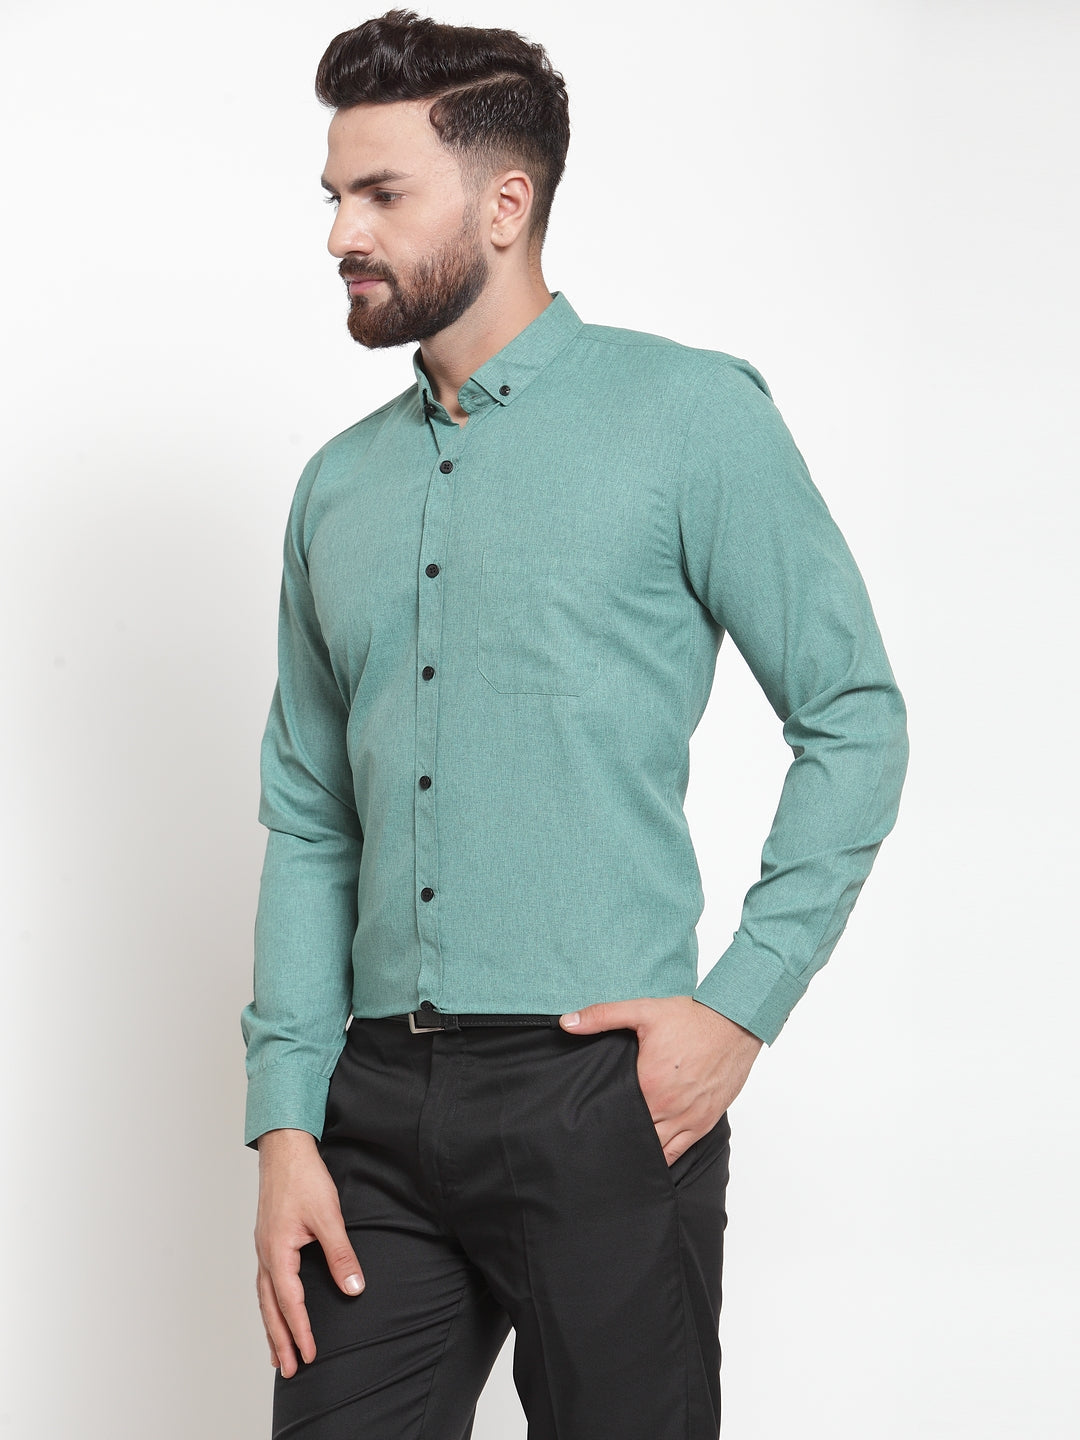 Men's Green Cotton Solid Button Down Formal Shirts ( SF 734Green ) - Jainish